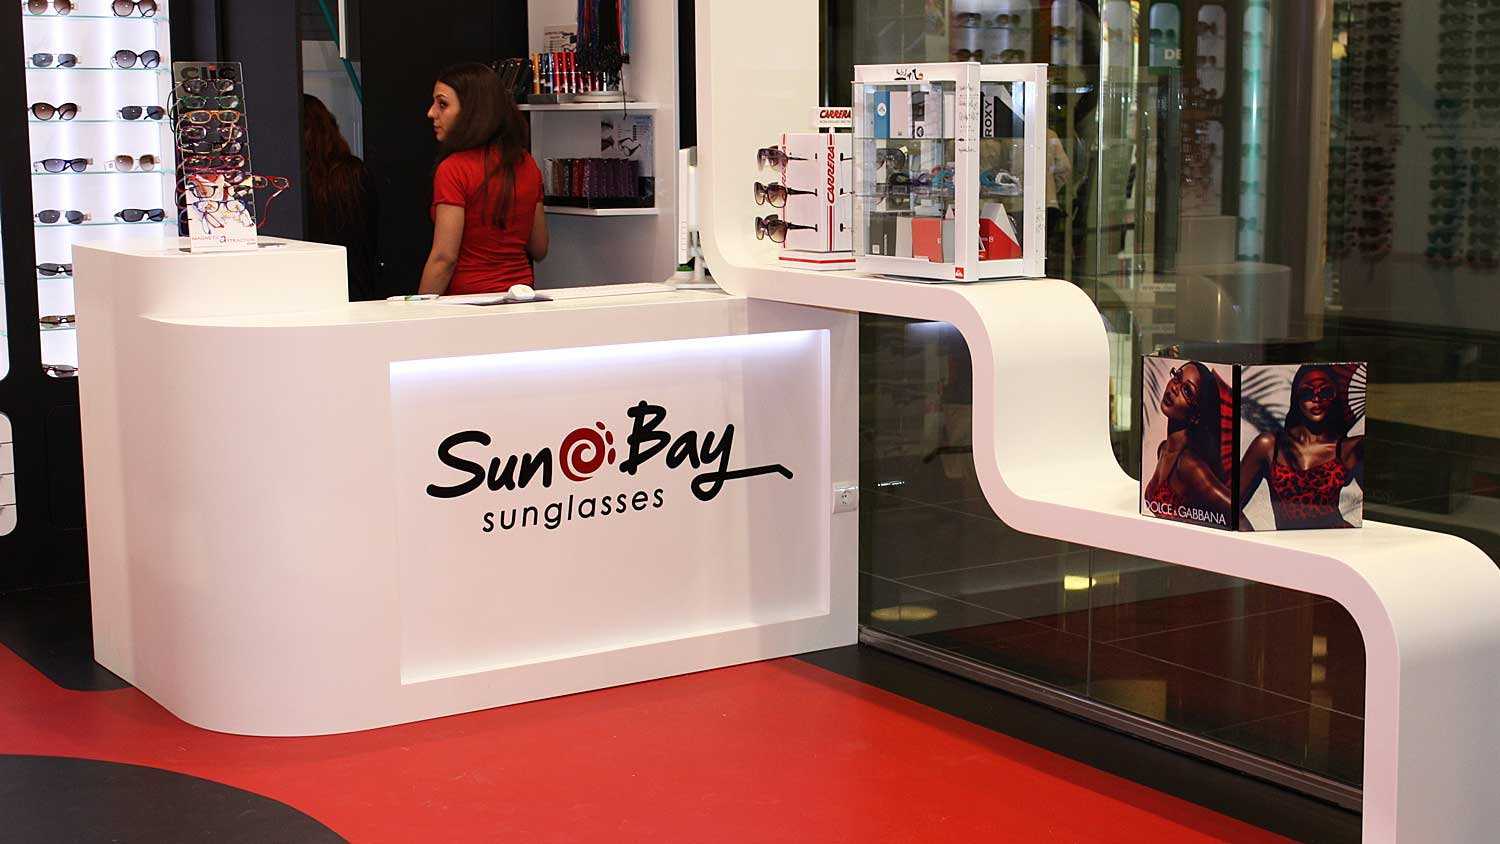 Sunbay-Sunglasses-Tecny-farma-6